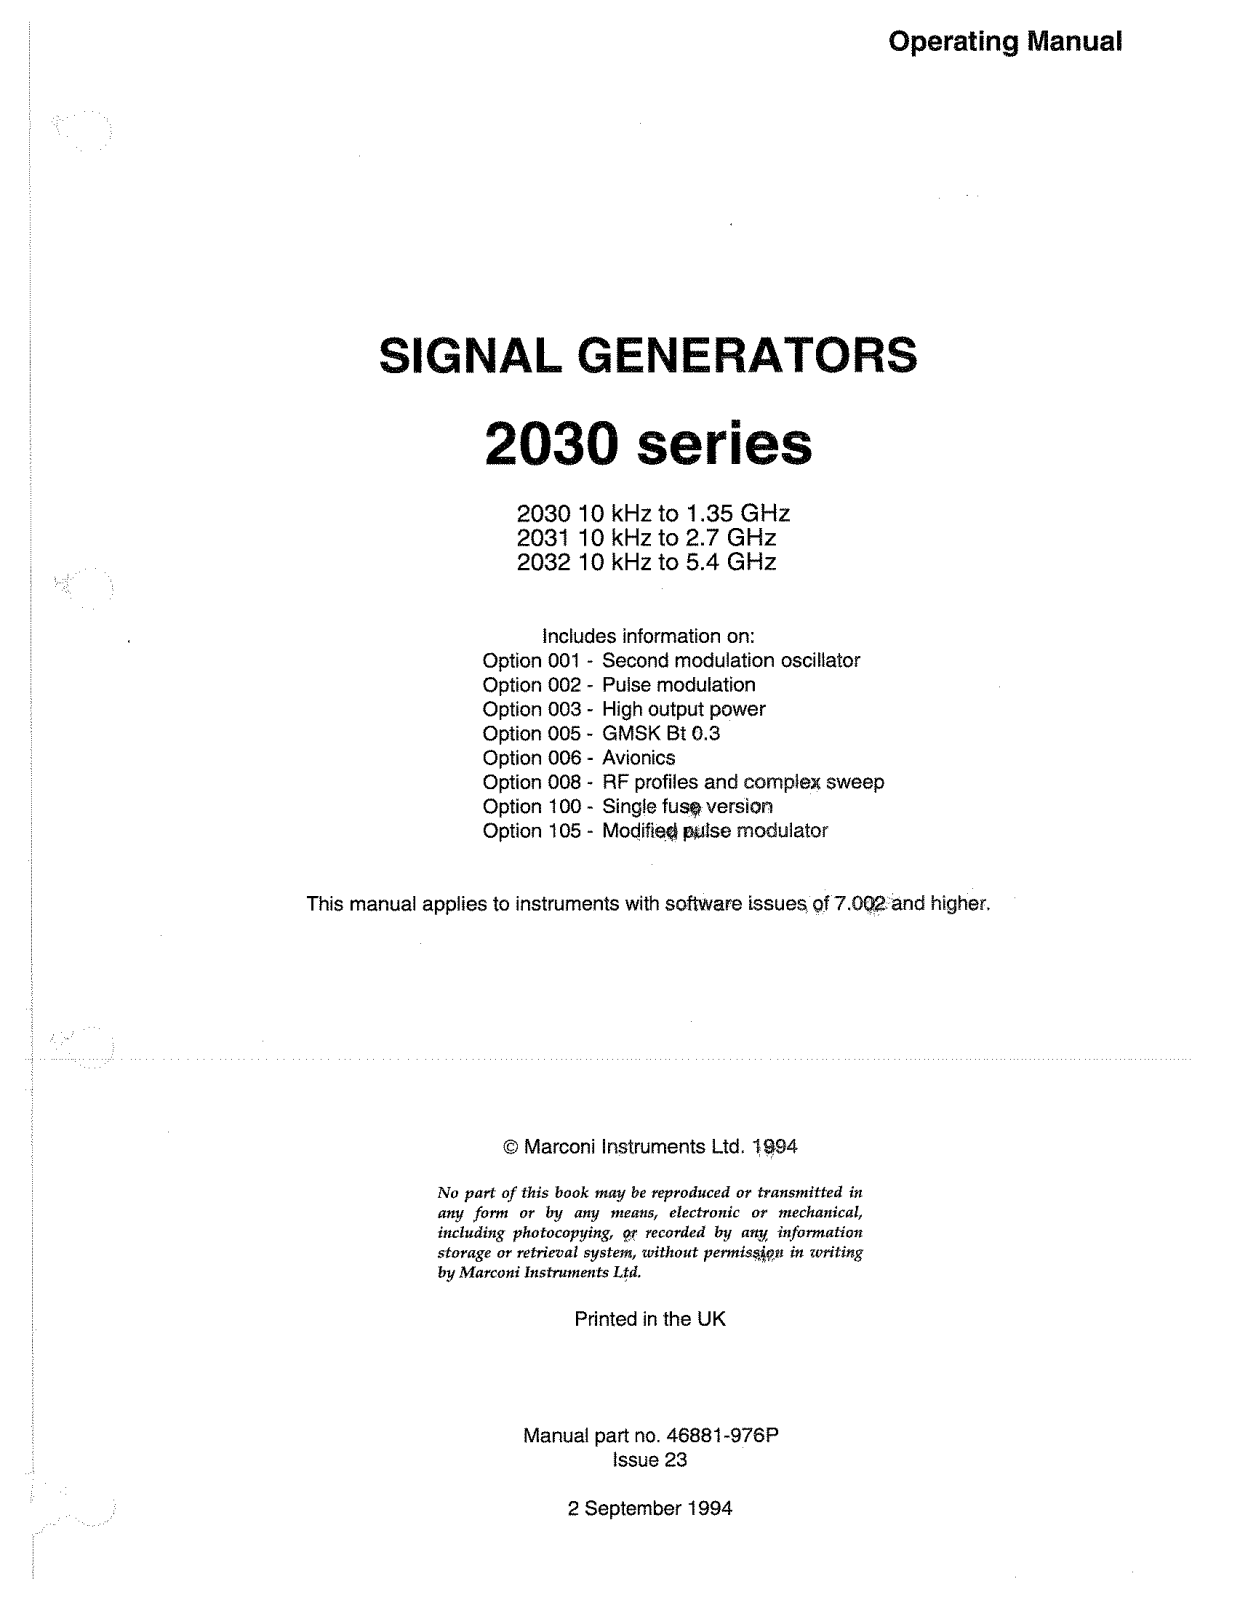 Marconi 2032, 2031, 2030 User Manual